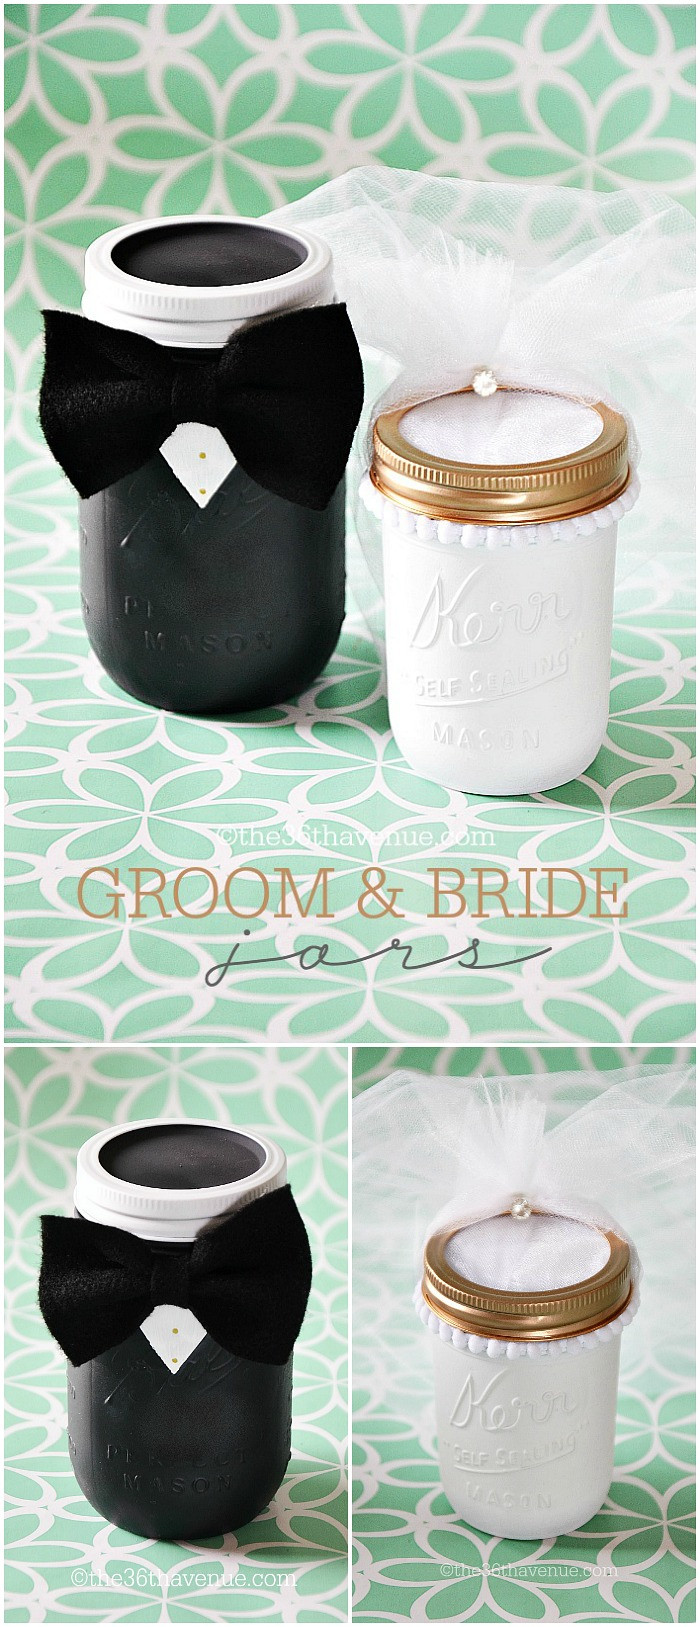 DIY Wedding Gift Ideas For Bride And Groom
 The 36th AVENUE Mason Jar Crafts – Groom & Bride